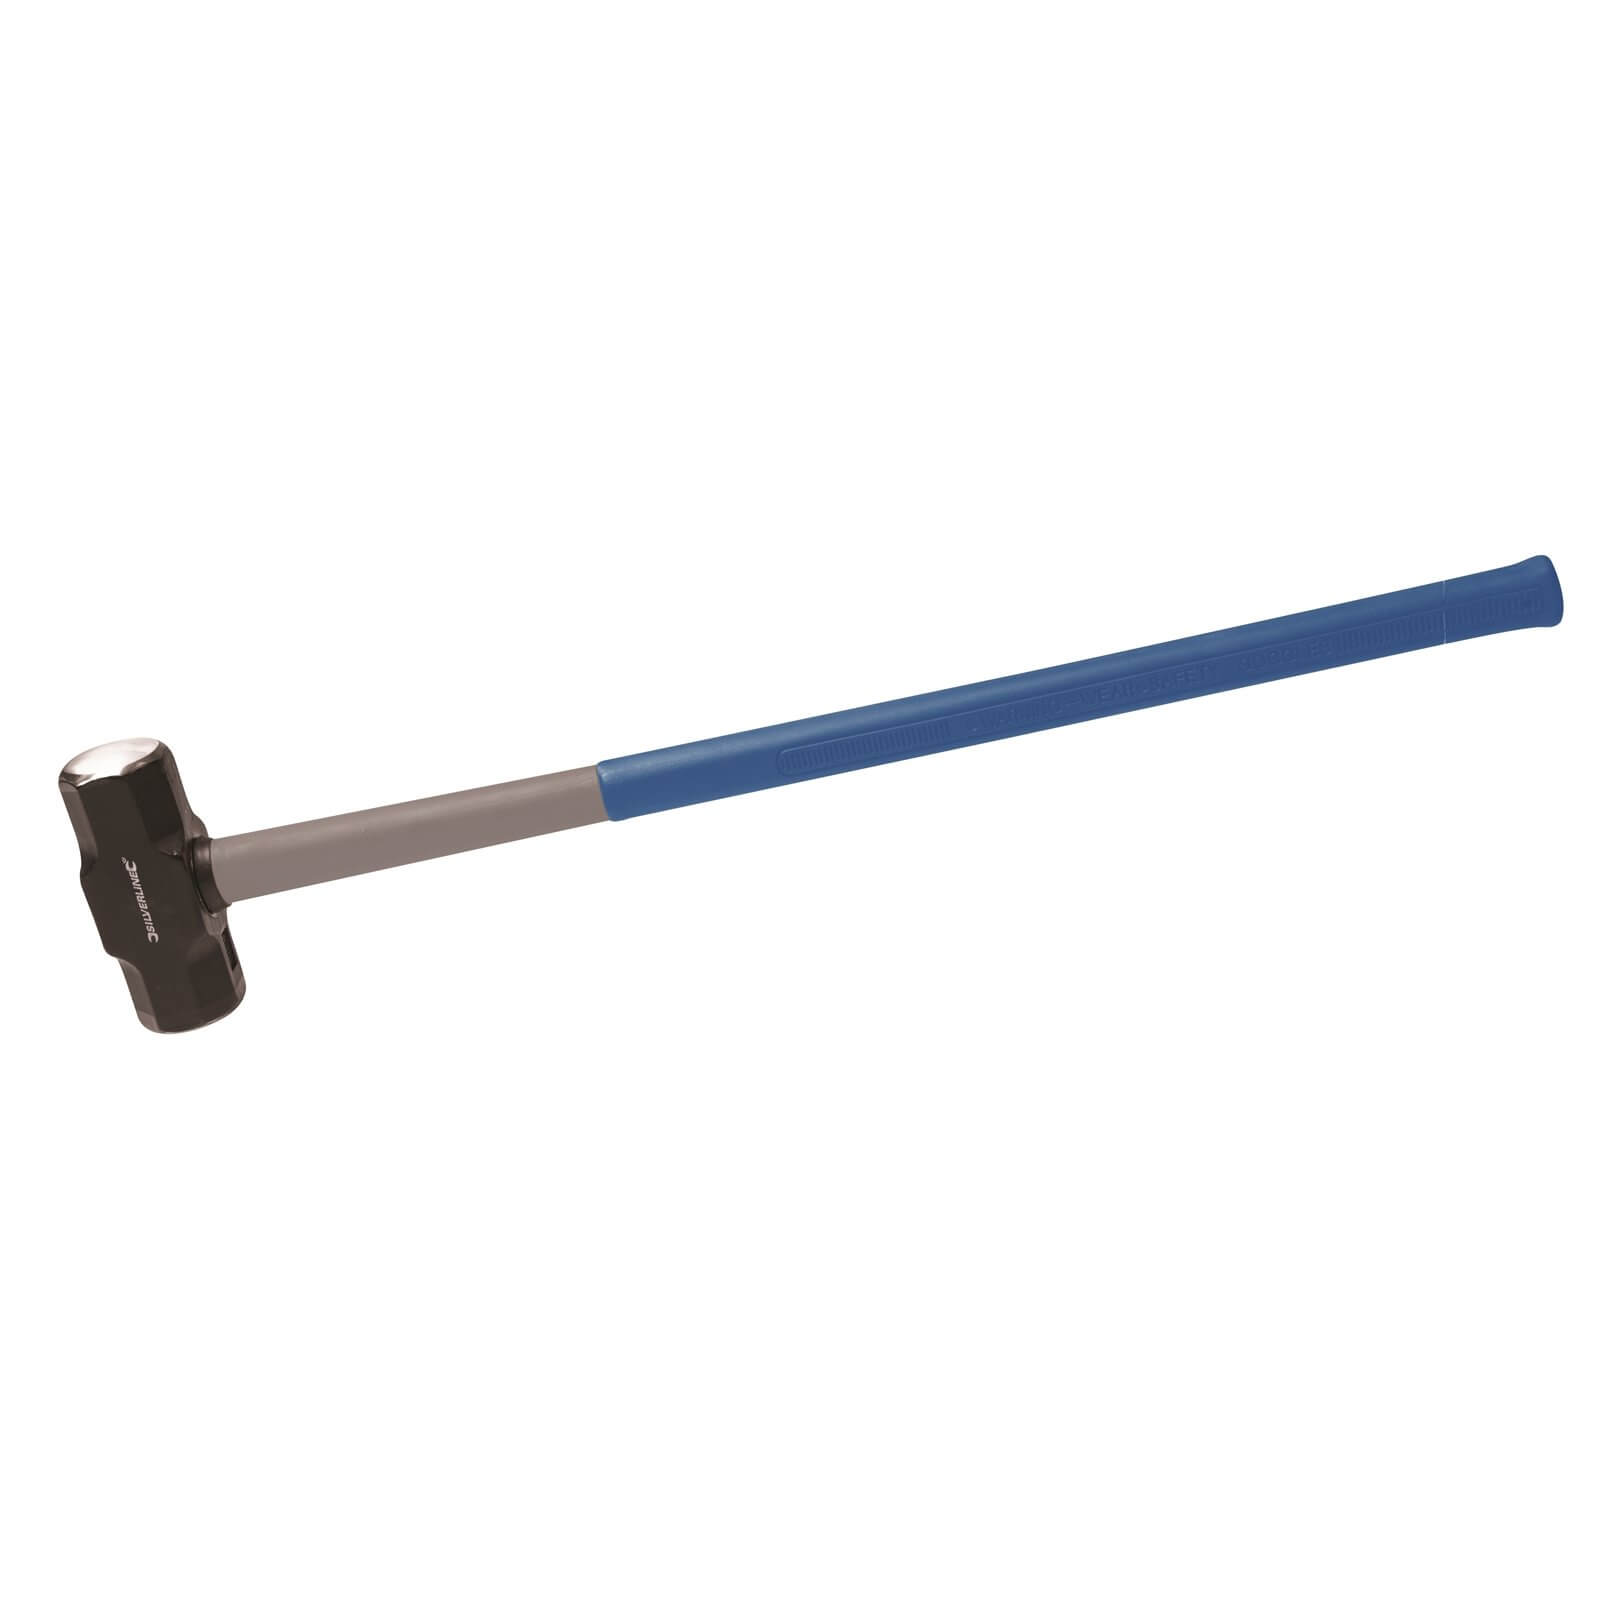 Silverline Fibreglass Sledge Hammer - 10lb (4.54kg)